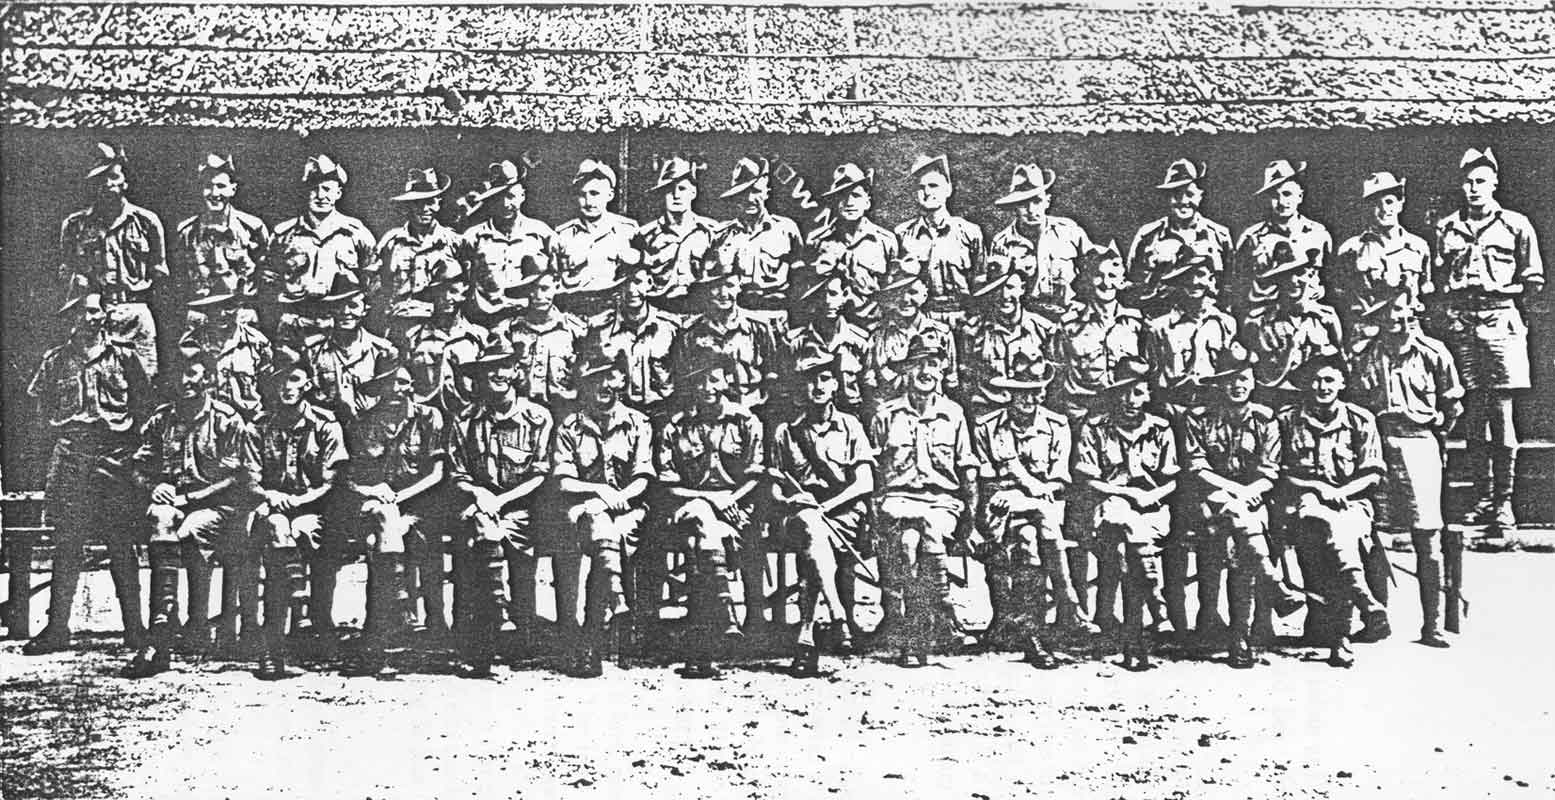 D Company, 18 Platoon
"D" Company, 2/30 Battalion AIF at Batu Pahat, Malaya, November, 1941.

Back row: left to right
1) ?? NX10272 - CAREY, Phillip Francis (Phil), Pte. - HQ Company, Mortar Platoon
2) NX37732 - PHILLIPS, Ernest William (Ernie), Pte. - D Company, 18 Platoon
3) NX47809 - VIDLER, George Thomas, Pte. - D Company, 18 Platoon
4) NX25857 - DAINTON, William Henry (Bill), Pte. - BHQ, Cook, D Company 
5) NX47342 - NEWTON, William Henry Andrew (Bill), Pte. - D Company, 18 Platoon
6) ?? NX59775 - PRATT, Bruce Manning, Pte. - D Company, 18 Platoon (possibly)
7) ?? NX41360 - WHITE (Rhodes-White), Robert Rhodes (Robert), Cpl. - D Company, 18 Platoon
8) ?? NX47304 - WELCH, Leslie Myrven (Les), Pte. - HQ Company, Signals Platoon
9) ??
10) NX47322 - GRIFFIS, Henry Alfred (Poly), Pte. - D Company, 18 Platoon
11) ??
12) NX47505 - MORGAN, Gordon Russell (Tommy), Pte. - D Company, 18 Platoon
13) NX47833 - WEST, Jack Sydney (Jackie), Pte. - D Company, 18 Platoon
14) NX47765 - ALCORN, Andrew Carson (Andy), Pte. - D Company, 18 Platoon
15) NX47750 - BRACE, Albert Ernest (Snowy), Pte. - D Company, 18 Platoon


Middle row: left to right
14) NX2536 - UPCROFT, Ernest Bruce (Bruce), Pte. - D Company, 18 Platoon
15) NX47652 - BEATTIE, Robert George (Bob), Pte. - D Company, 18 Platoon
16) NX47845 - OLLEY, Alexander George (Dadda or Alex), Pte. - D Company, 18 Platoon
17) NX47700 - ALEXANDER, Ronald Norrie Lyle (Ron), Pte. - D Company, 18 Platoon
18) NX47185 - OLDKNOW, Norman Dallas (Dal), Pte. - D Company, 18 Platoon
19) NX51831 - GALBRAITH, William Martin (Bill), Pte. - D Company, 18 Platoon
20) NX51660 - CAREY, John Peter (Jack), Pte. - D Company, 18 Platoon
21) NX60594 - STUART, Lloyd Thomas, Pte. - D Company, 18 Platoon
22) NX47597 - HOGAN, Martin Leo (Leo), Pte. - D Company, 18 Platoon
23) QX21939 - WHYATT, Lesly, Pte. - D Company, 18 Platoon
24) NX47685 - WELLS, Robert Frederick (Hook or Bob), Pte. - D Company, 18 Platoon
25) NX47570 - ROSS, William Maxwell (Max), Pte. - D Company, 18 Platoon
26) NX47759 - JOHNSTON, George Evan (Joe), Pte. - D Company, 18 Platoon
27) NX47271 - ELLIOTT, Lawrence (Bill), Pte. - D Company, 16 Platoon

Front row: left to right
28) NX47320 - GODBOLT, Harold, Pte. - D Company, 18 Platoon
29) NX47319 - GODBOLT, Raymond Cecil (Ray), Pte. - D Company, 18 Platoon
30) NX2721 - HADLEY, John Martin, Pte. - D Company, 18 Platoon
31) NX58219 - GLOVER, Leslie Clive, L/Cpl. - D Company, 18 Platoon
32) NX36202 - BROWN, William Henry (Bill), Sgt. - D Company, 18 Platoon
33) NX27762 - HUDSON, Allan Edwin Stirling, Lt. - C Company 
34) NX70443 - HENDY, Leonard Frank Graham (Len), Lt. - D Company, O/C 18 Platoon
35) NX41262 - HICKSON, Brian Murray Prior, Cpl. - D Company, 18 Platoon
36) NX35581 - LANGLEY, Roland (Ron), Cpl. - D Company, 18 Platoon
37) NX47774 - NEWTON, Earl Spencer, Cpl. - D Company, 18 Platoon
38) NX41230 - GOLLEDGE, Robert Charles (Red or Charlie), Cpl. - D Company, 18 Platoon
39) NX58315 - BAXTER, Leslie James (Les), Pte. - D Company, 18 Platoon


Keywords: 20131118b